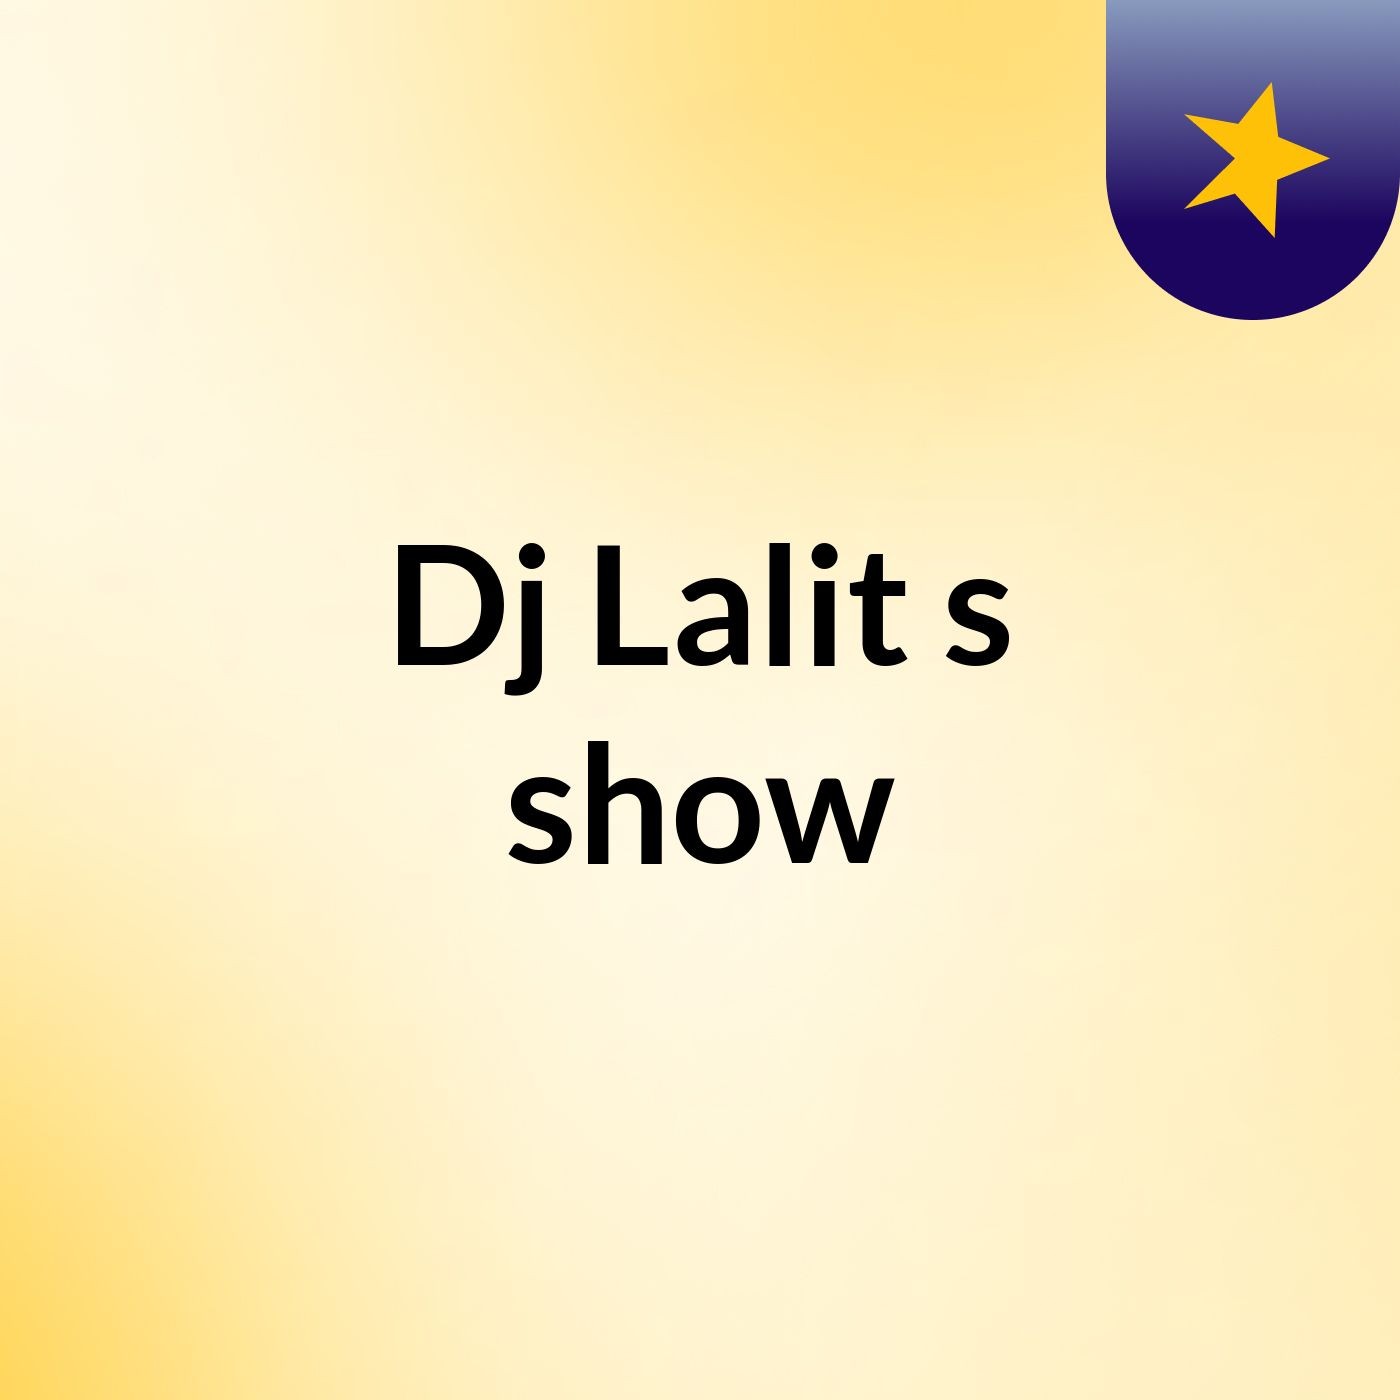 Dj Lalit's show